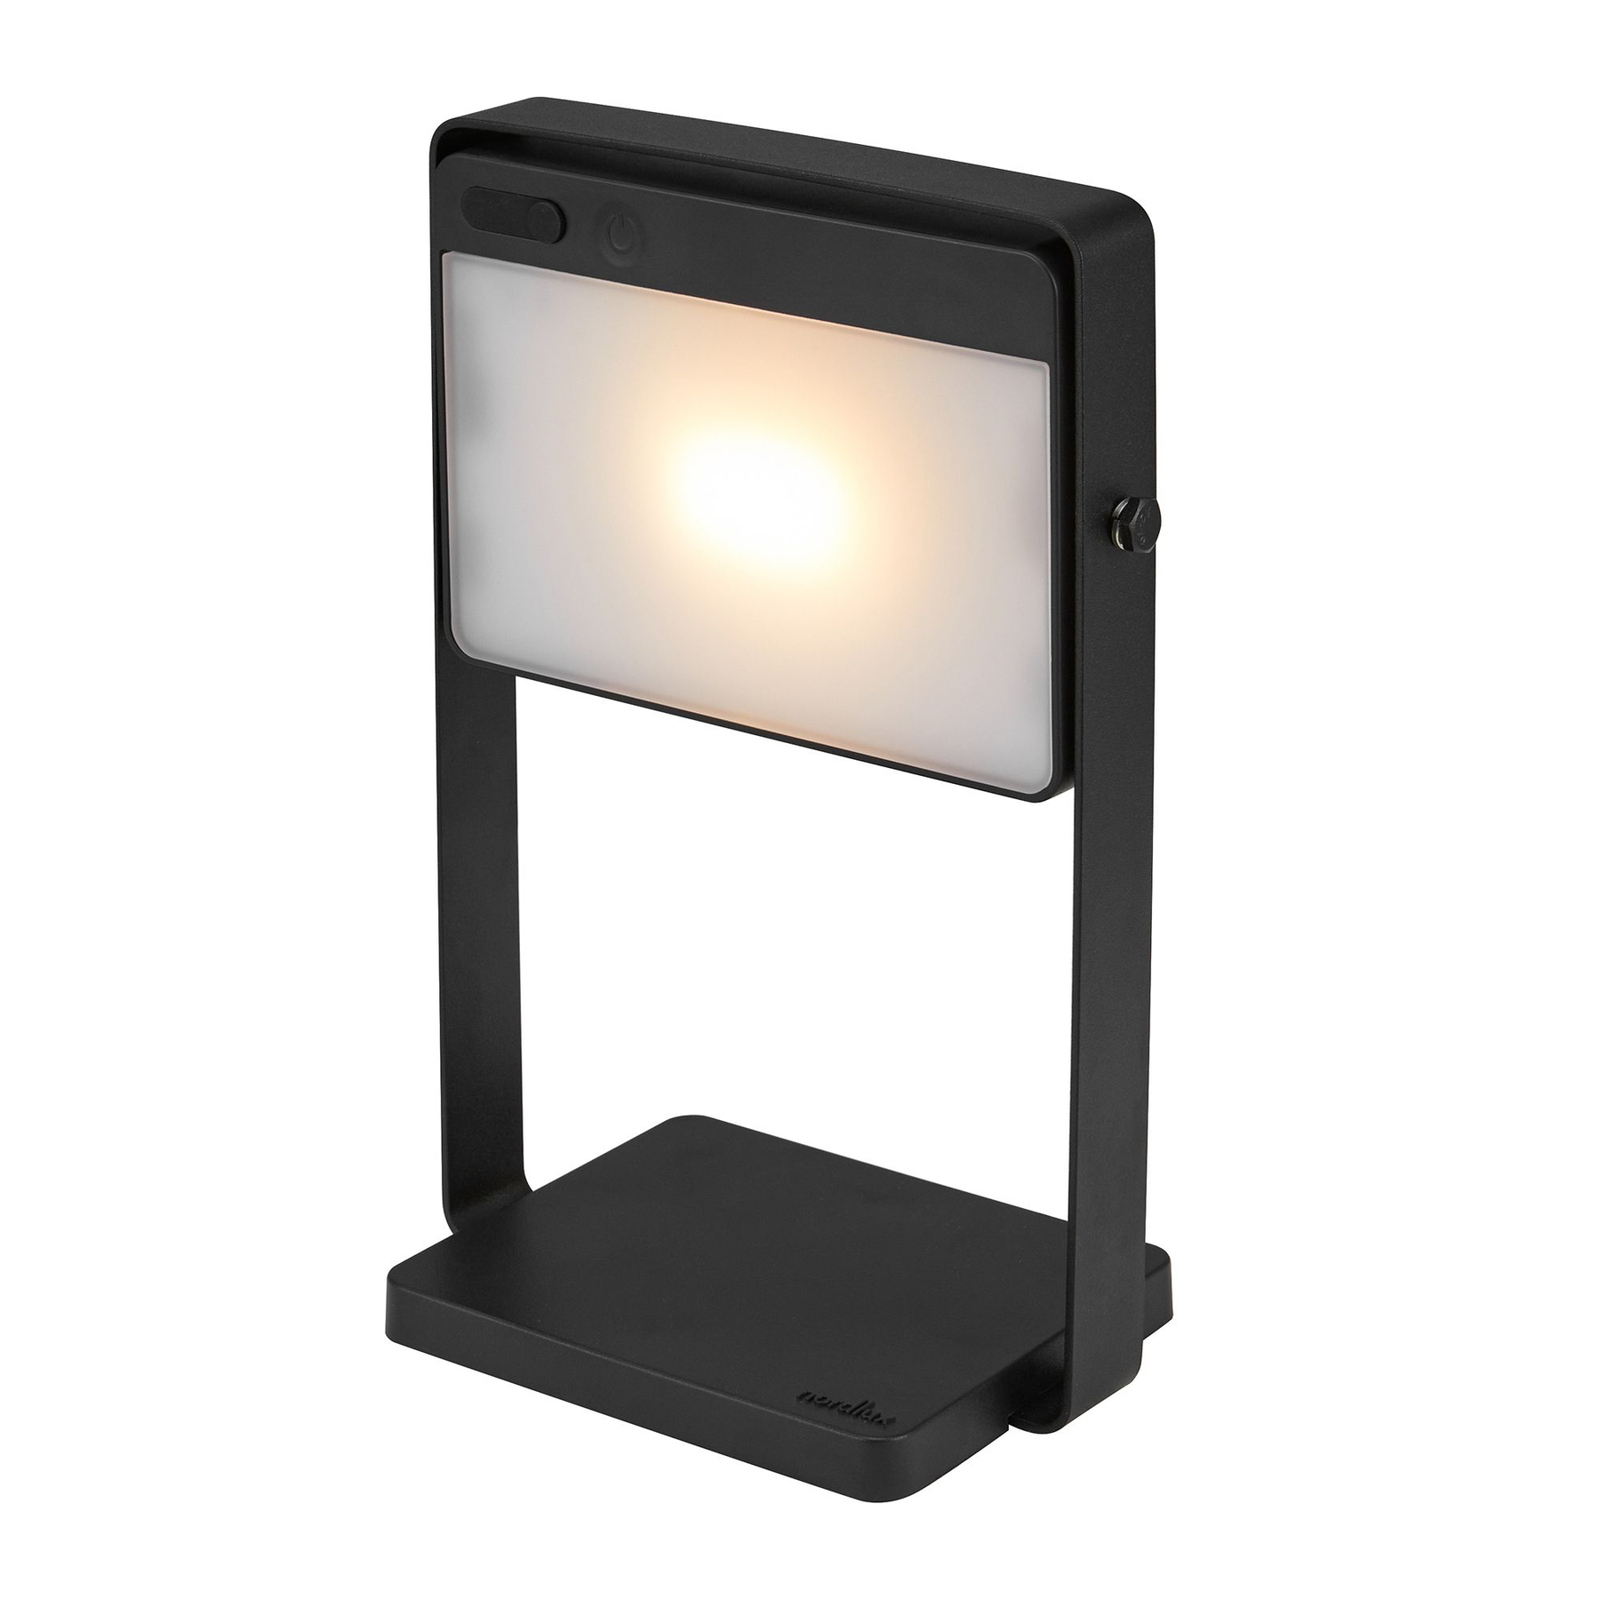 Saulio LED tafellamp op zonne-energie, zwart, IP44, aluminium, USB,